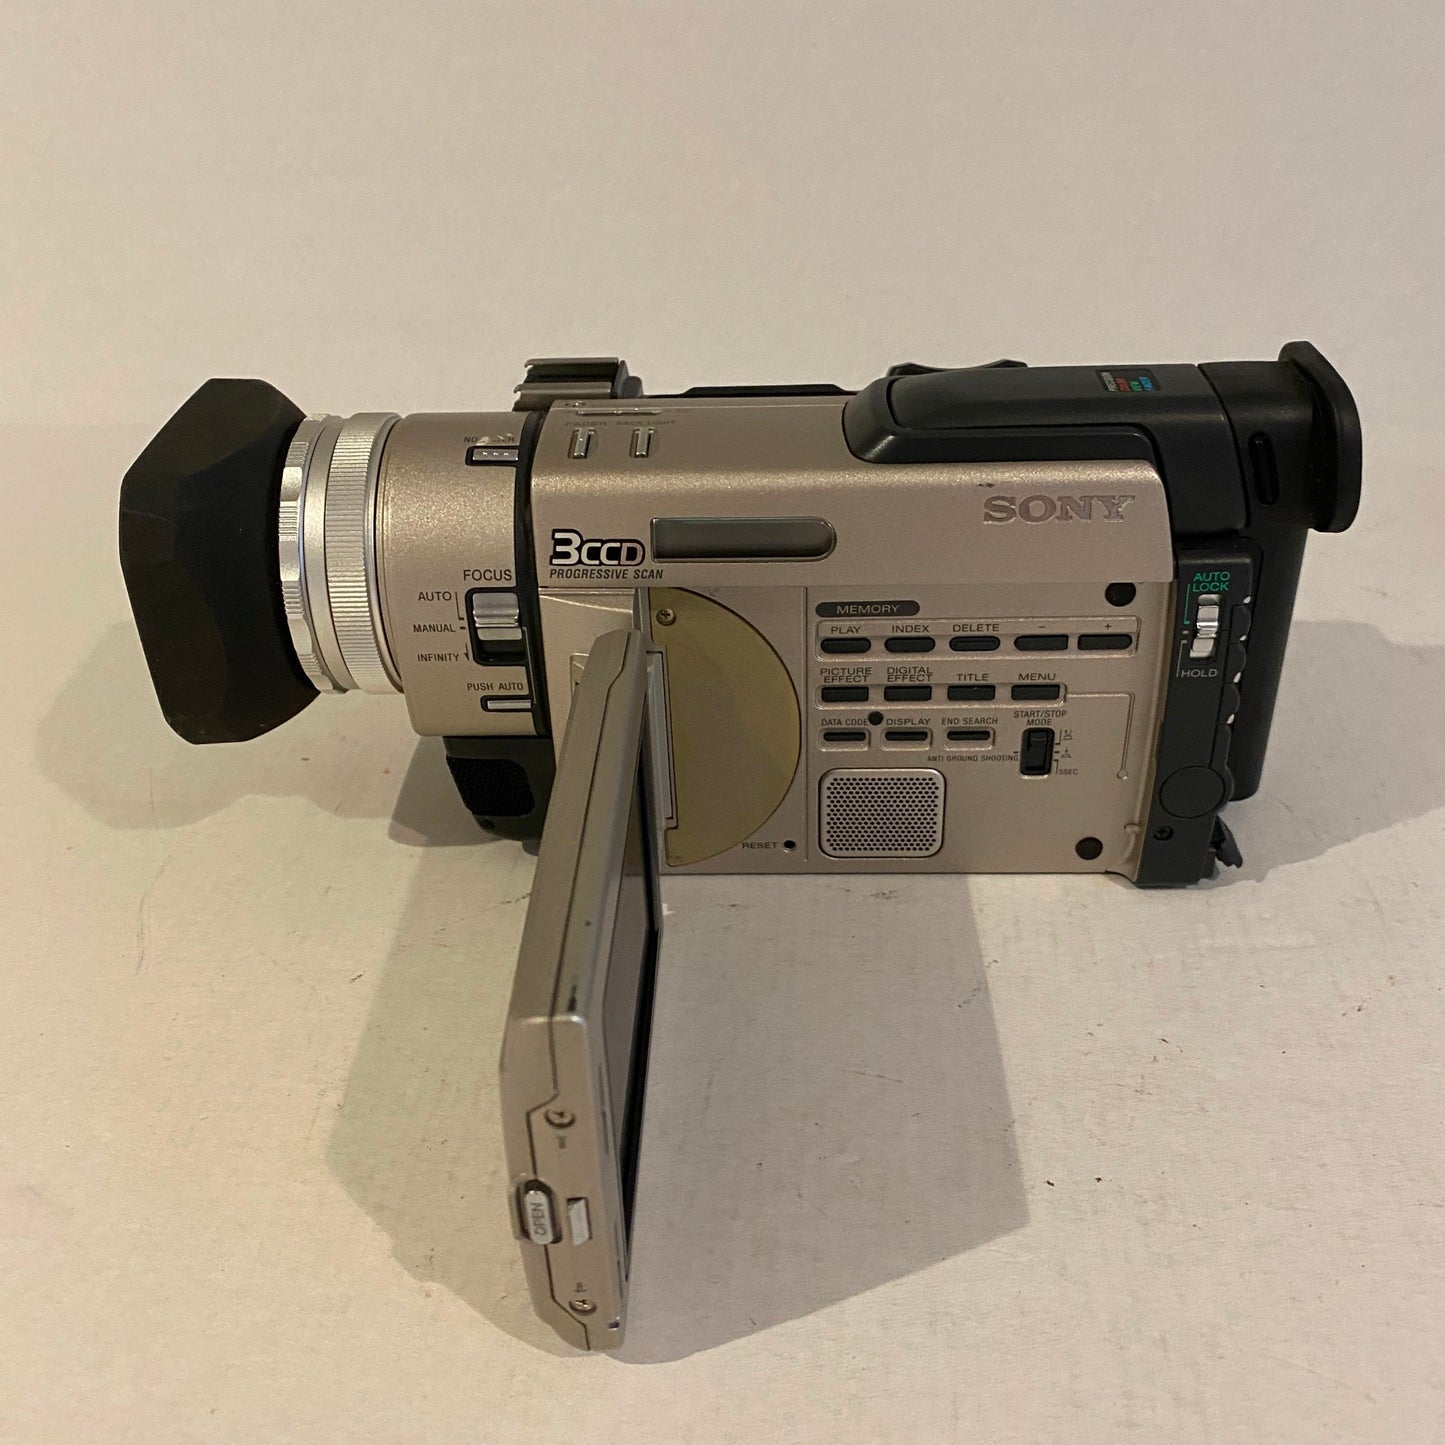 Sony Mini DV Handycam Digital Video Camera - DCR-TRV900